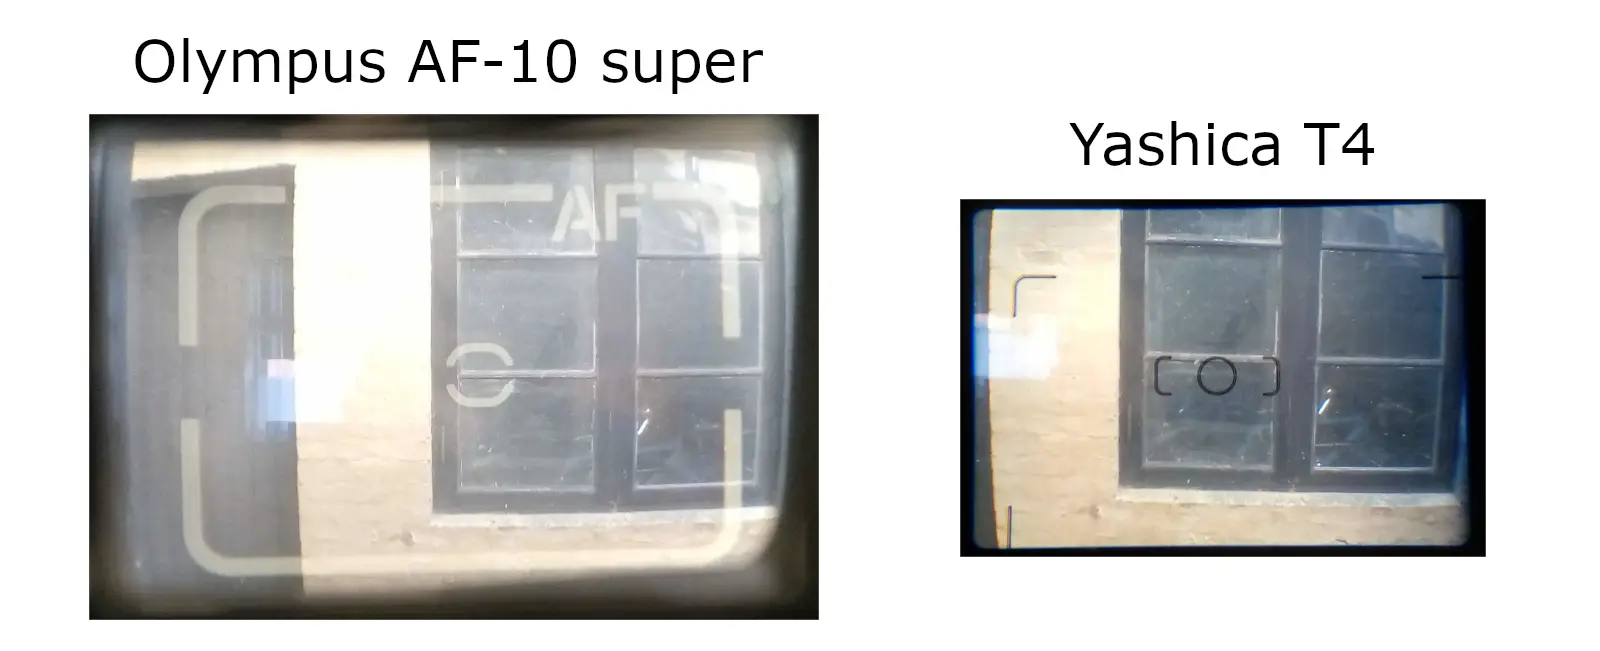 Yashica T4 viewfinder comparison